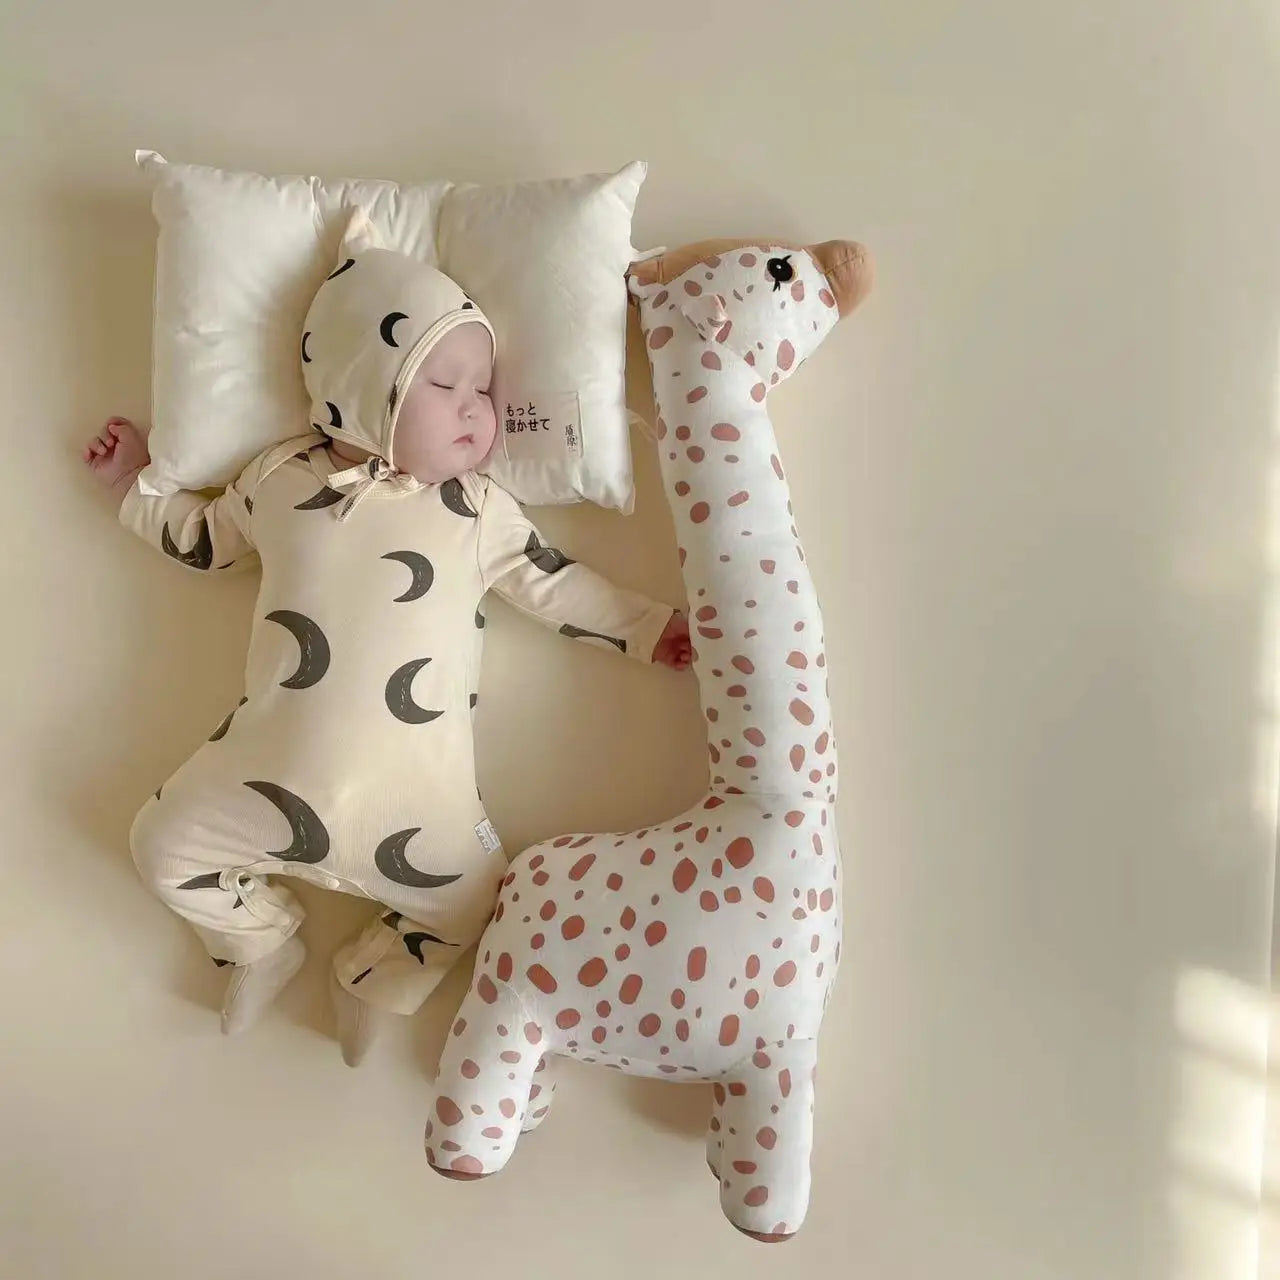 Soft Plush Giraffe Toy - Cuddly Animal Doll for Kids & Room Decor